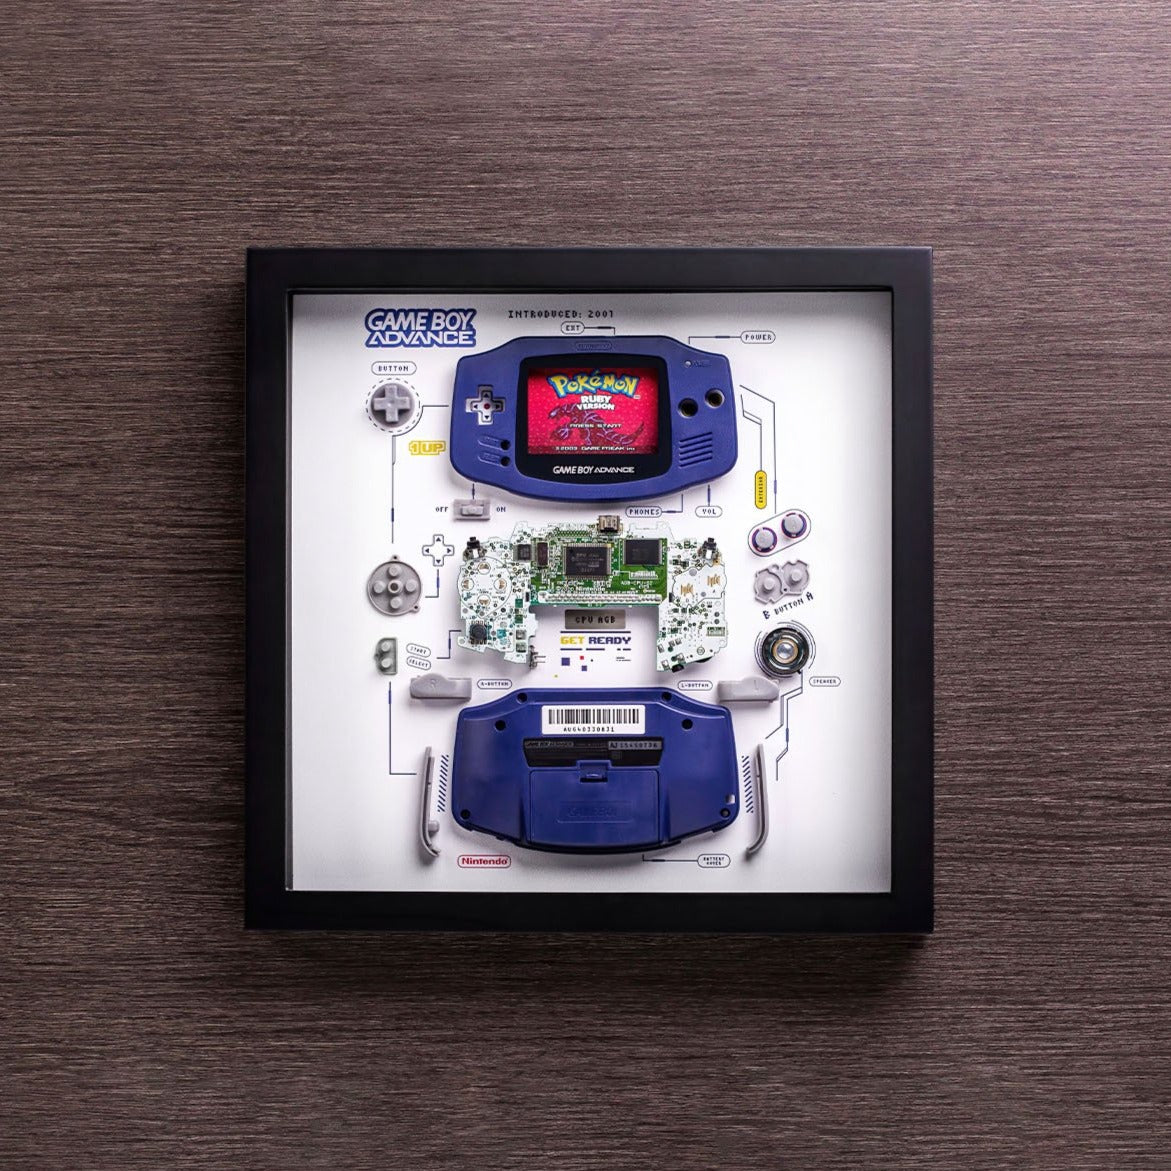 Wake Concept Store, GRID® Game Boy Advance